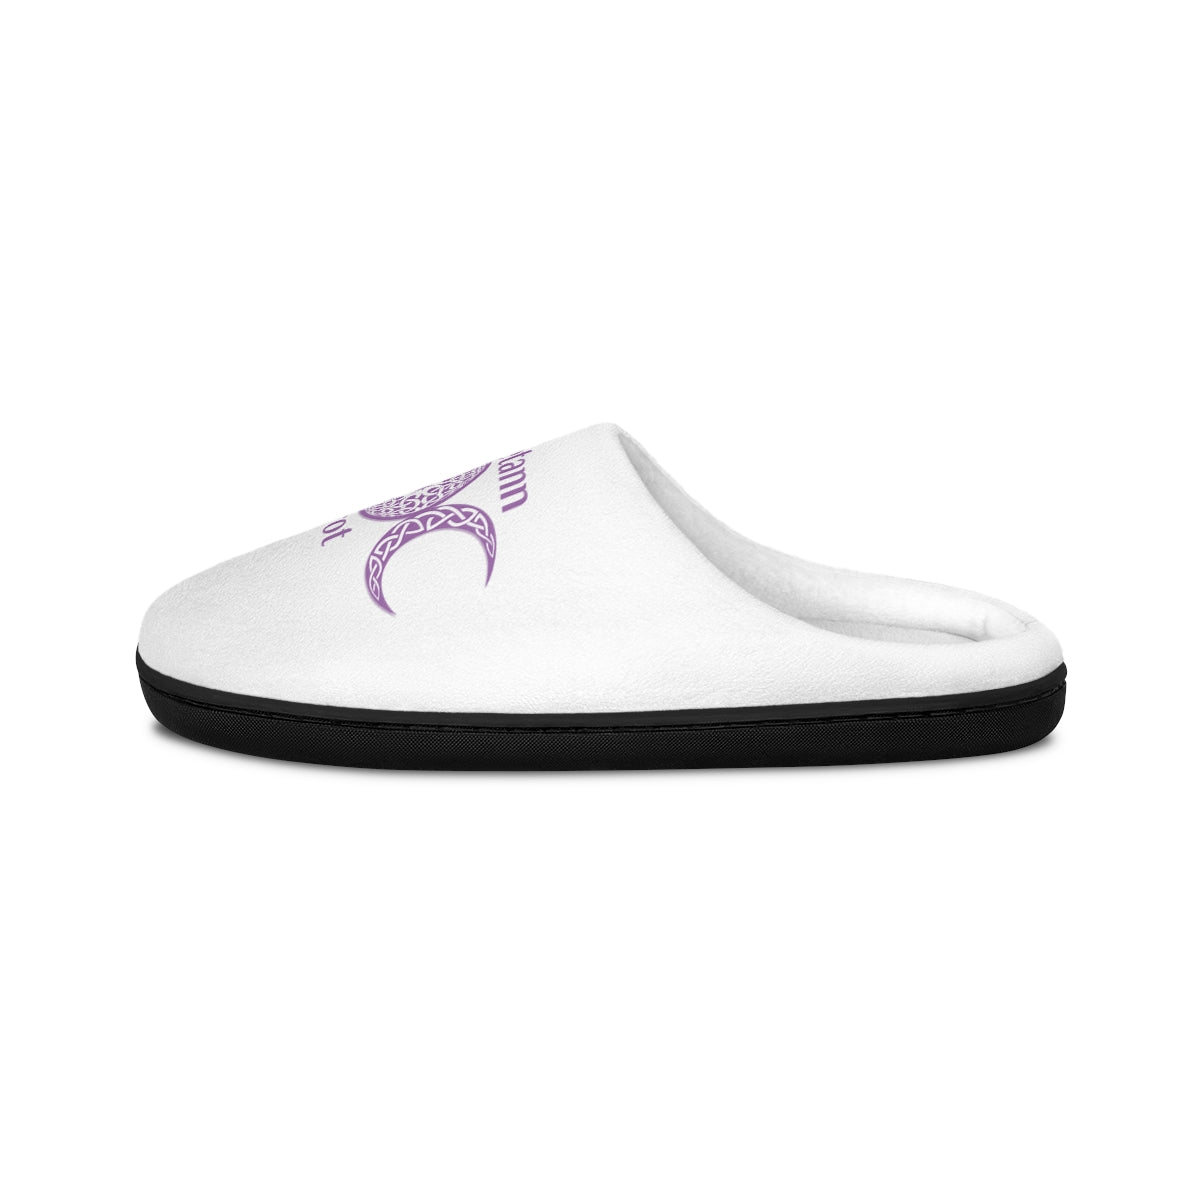 Violetann Tarot Logo - Men's Indoor Slippers